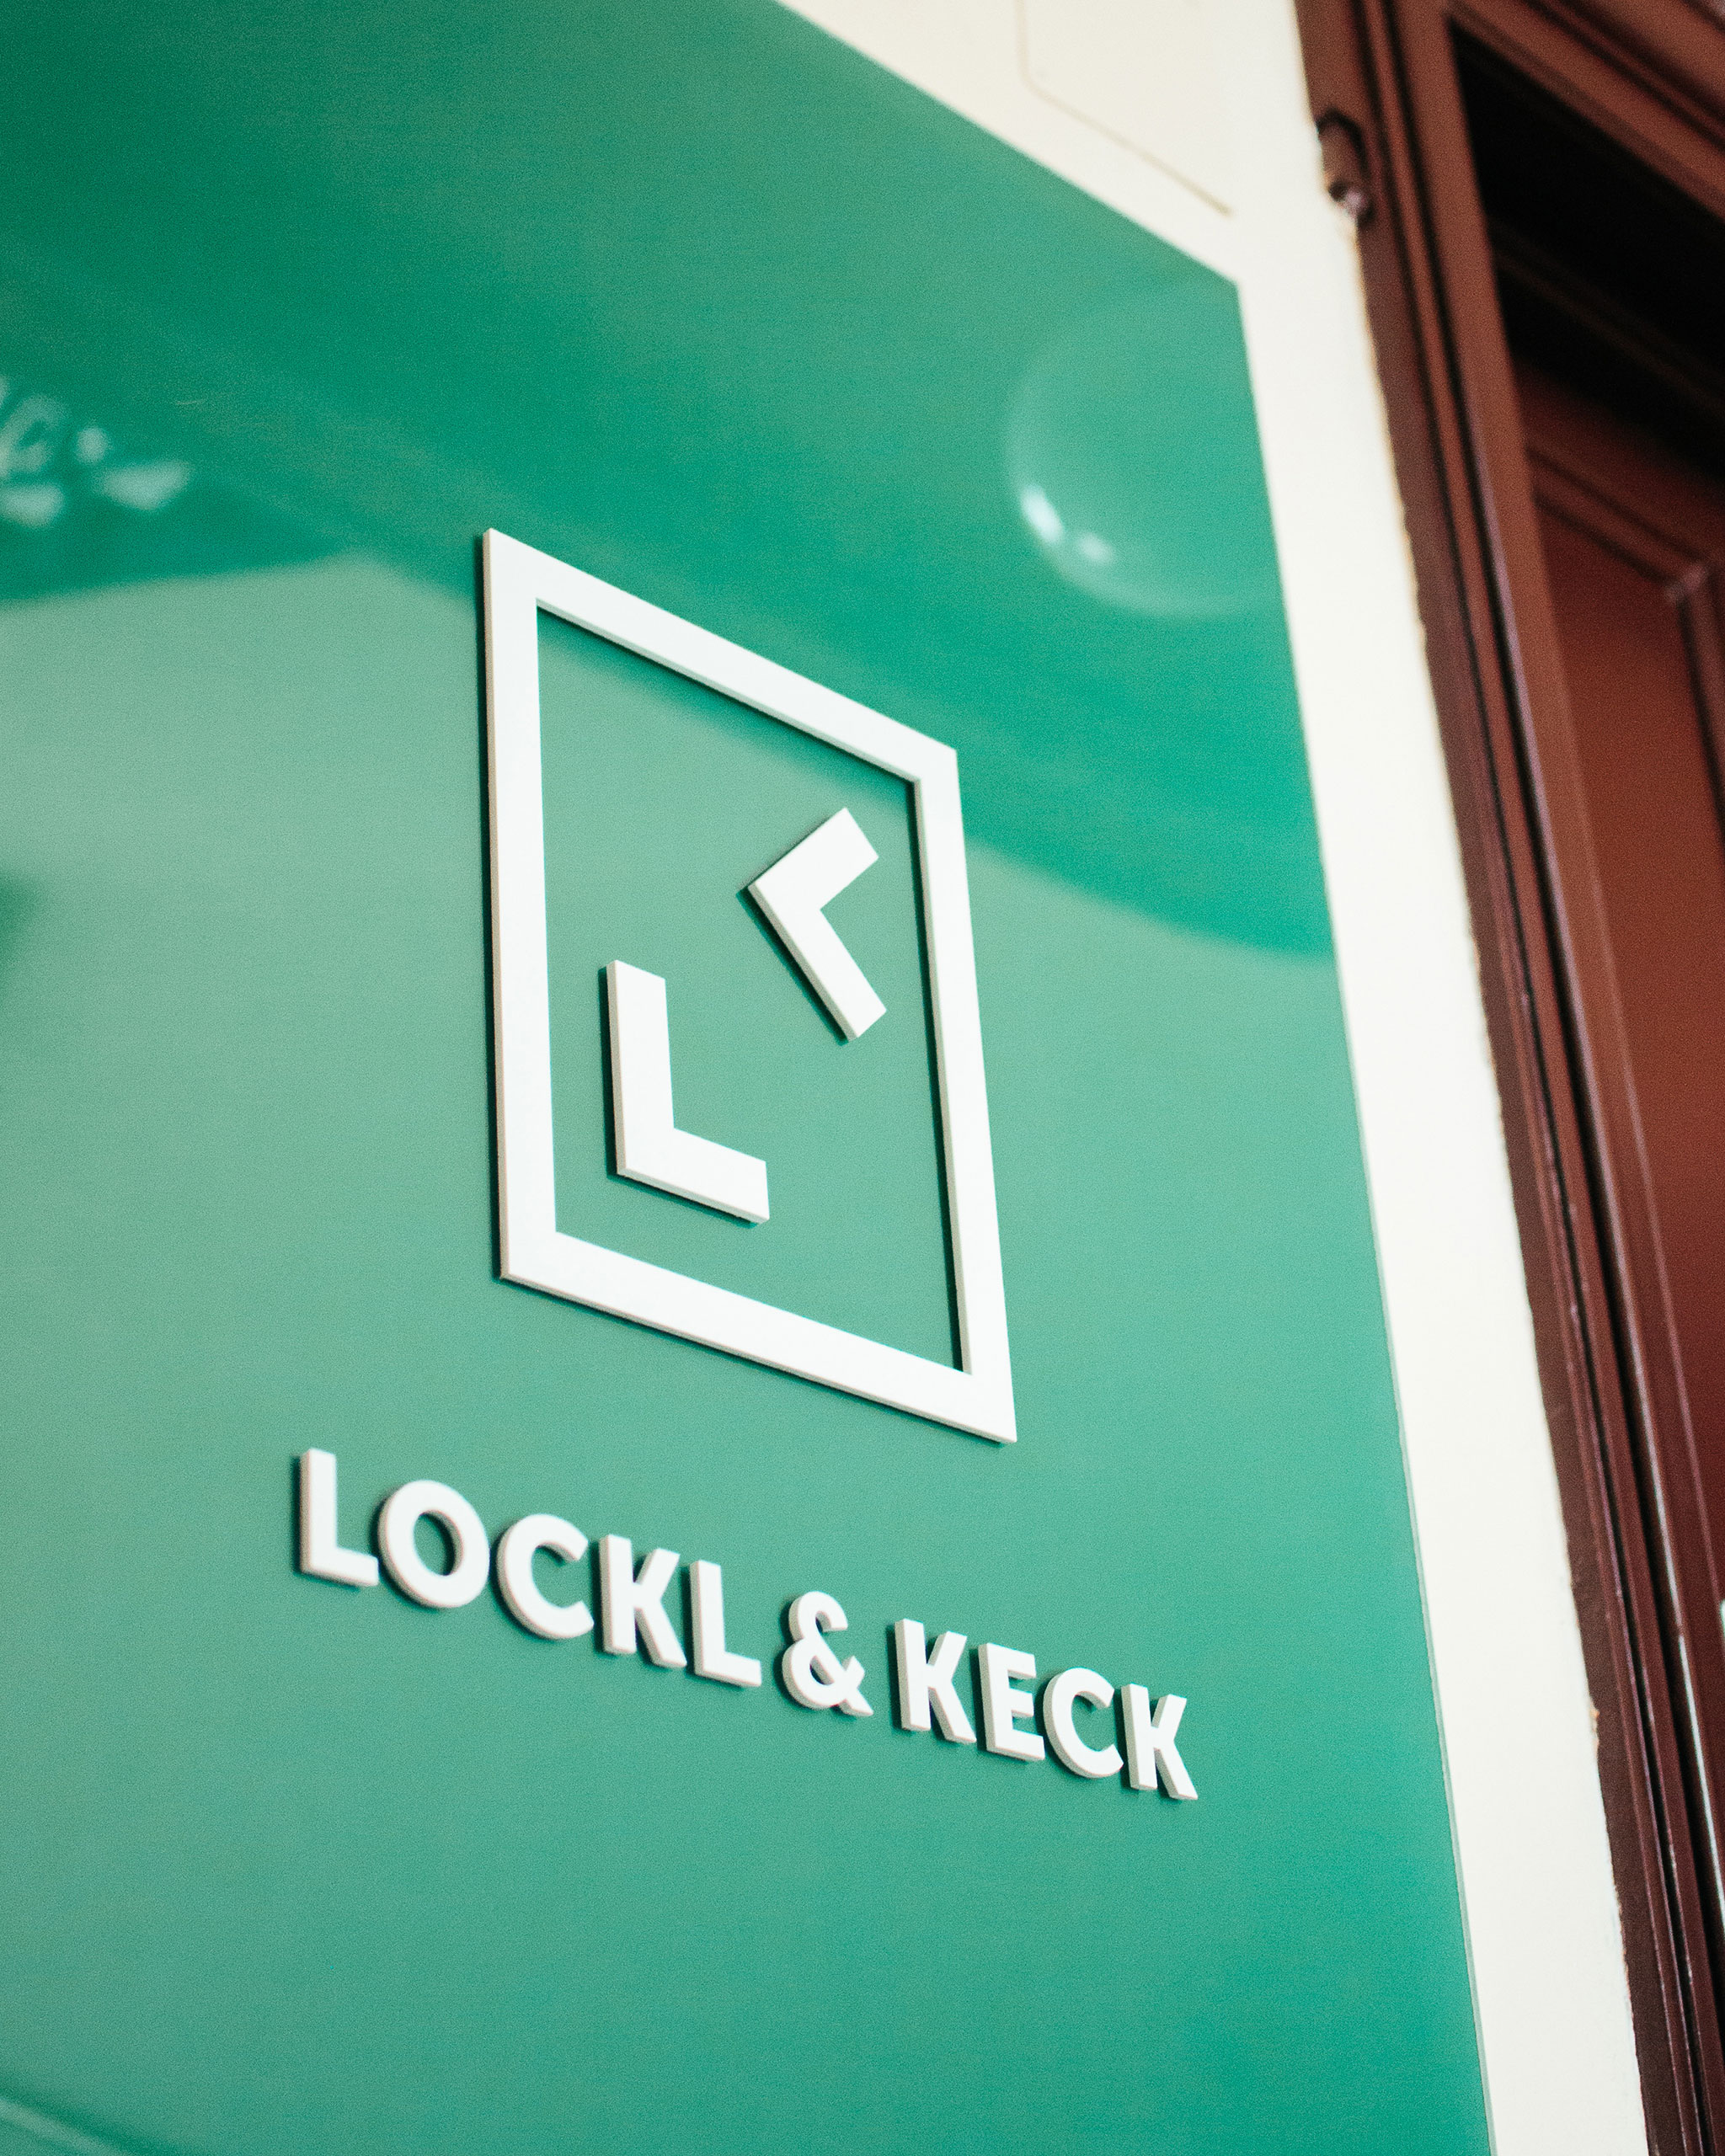 Lockl-Keck-Quicklook2